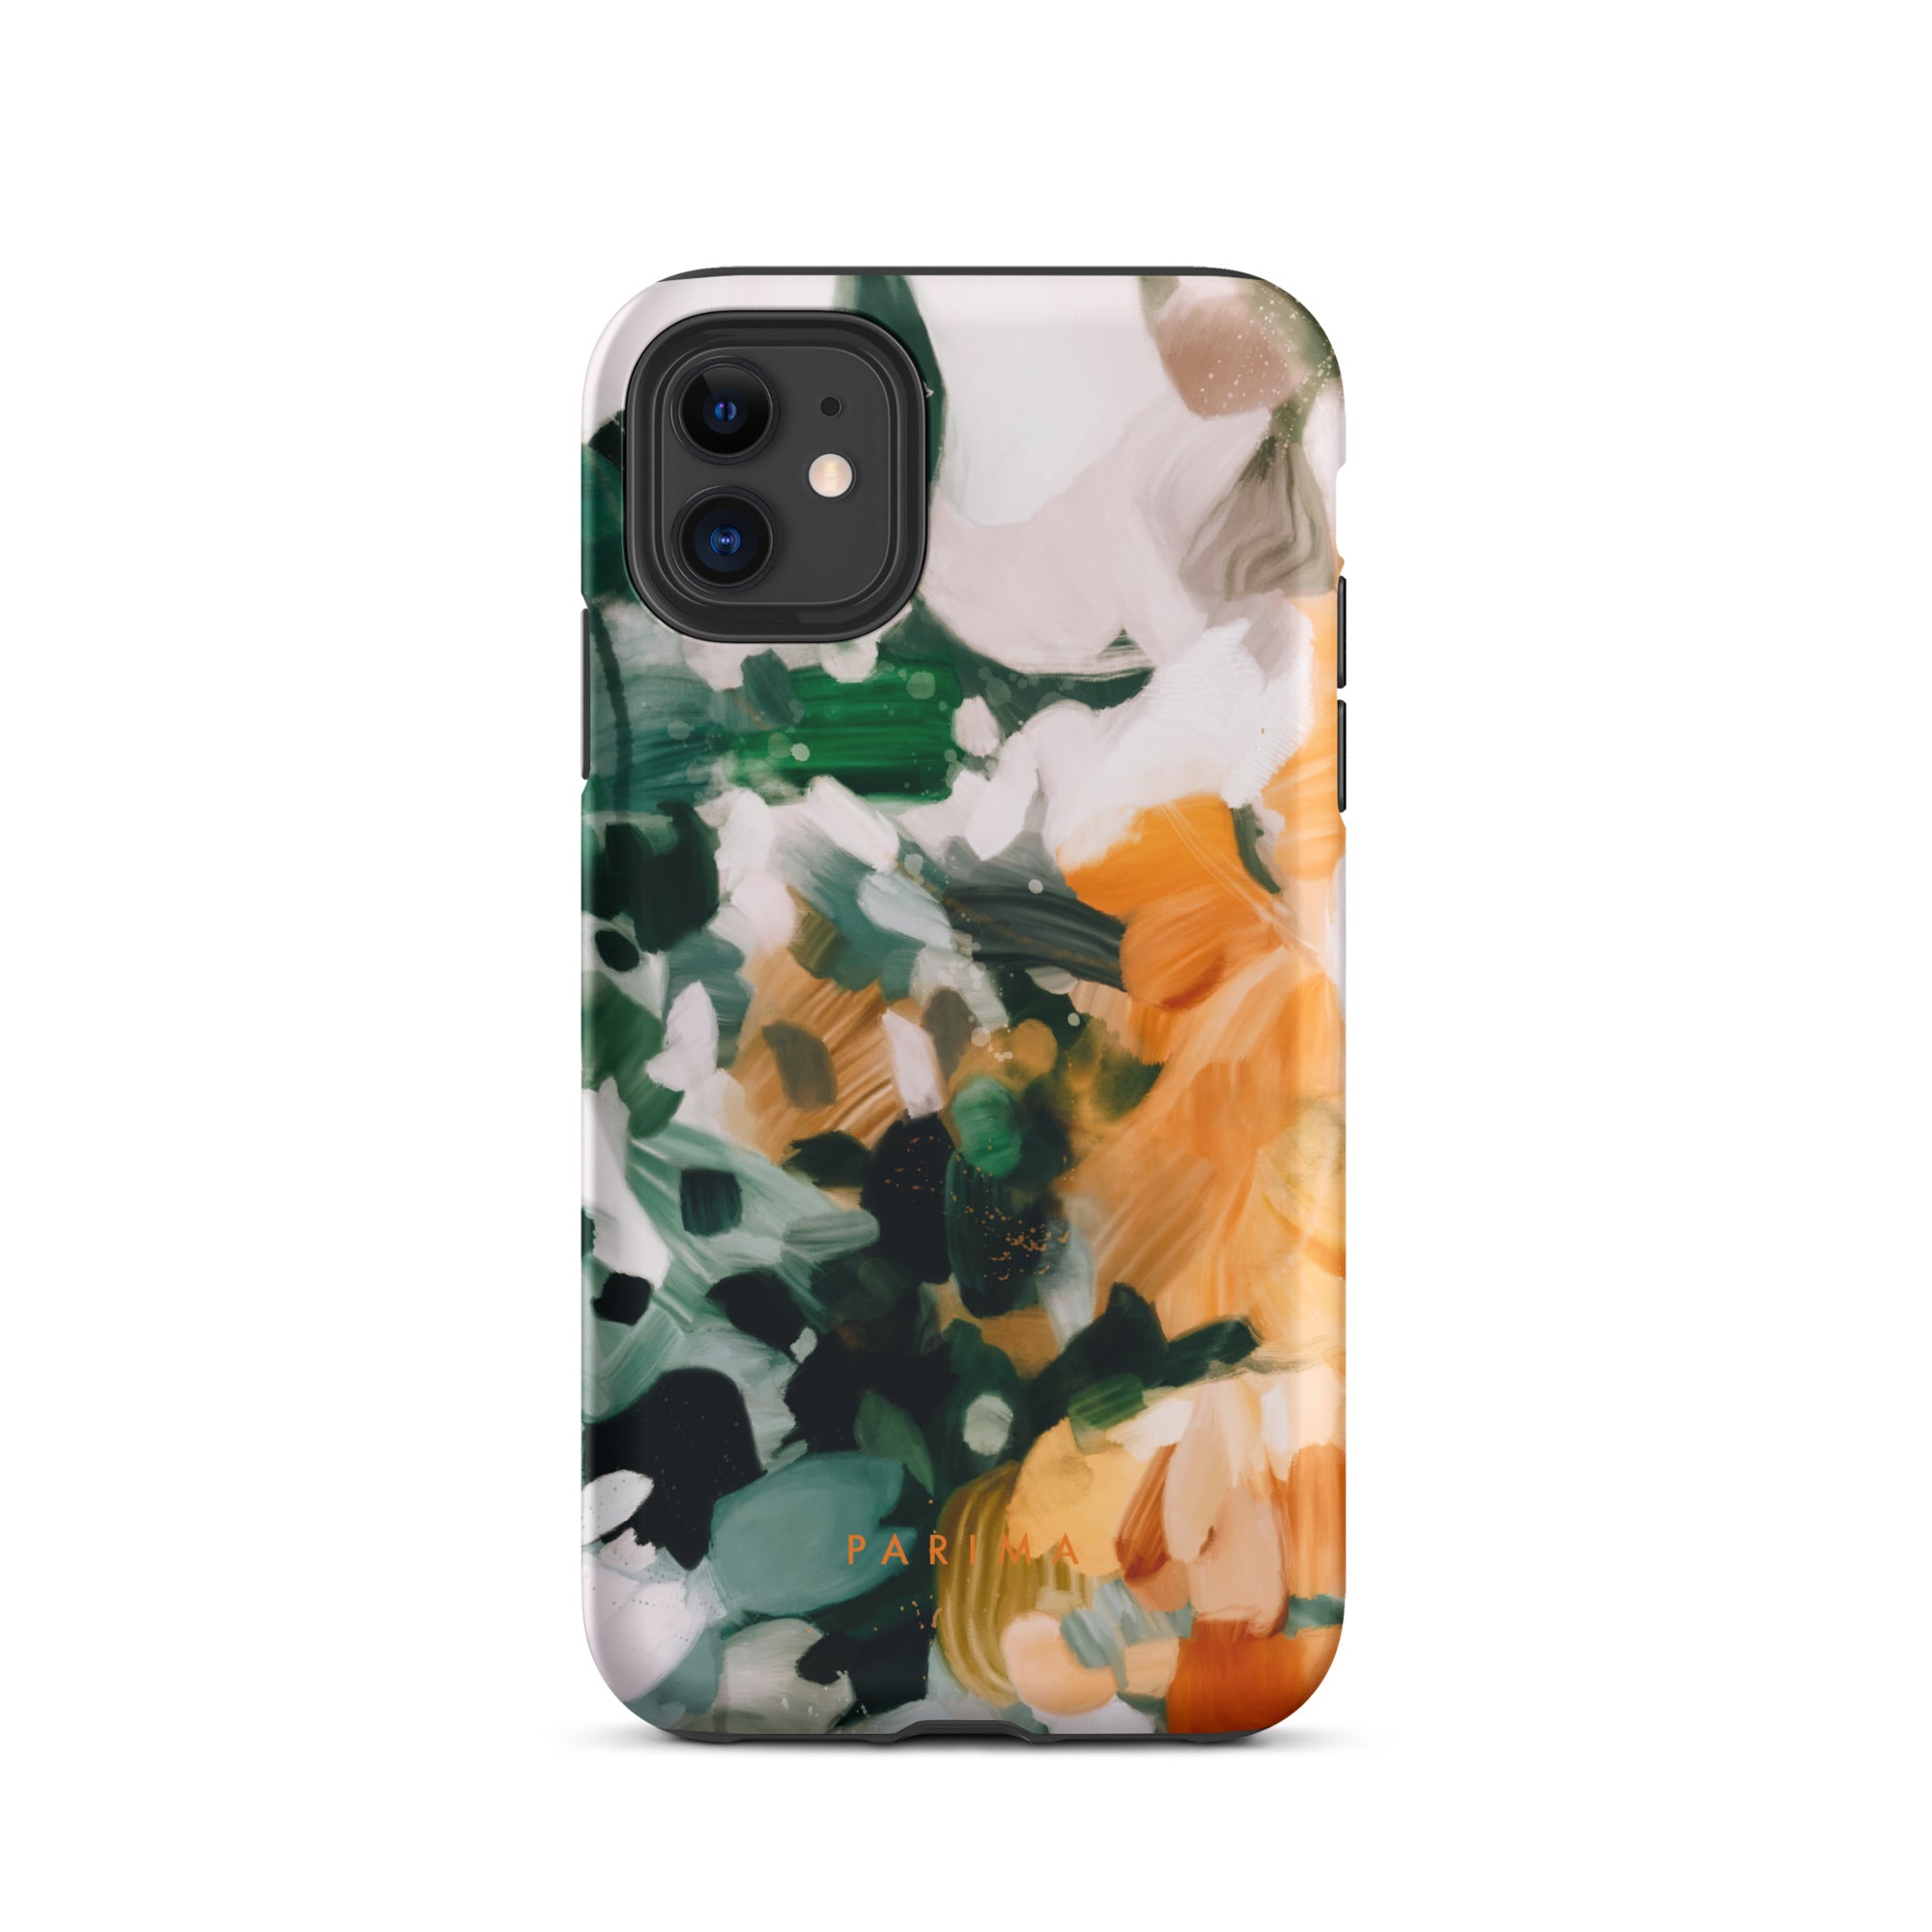 Aspen, green and orange abstract art - iPhone 11 tough case by Parima Studio